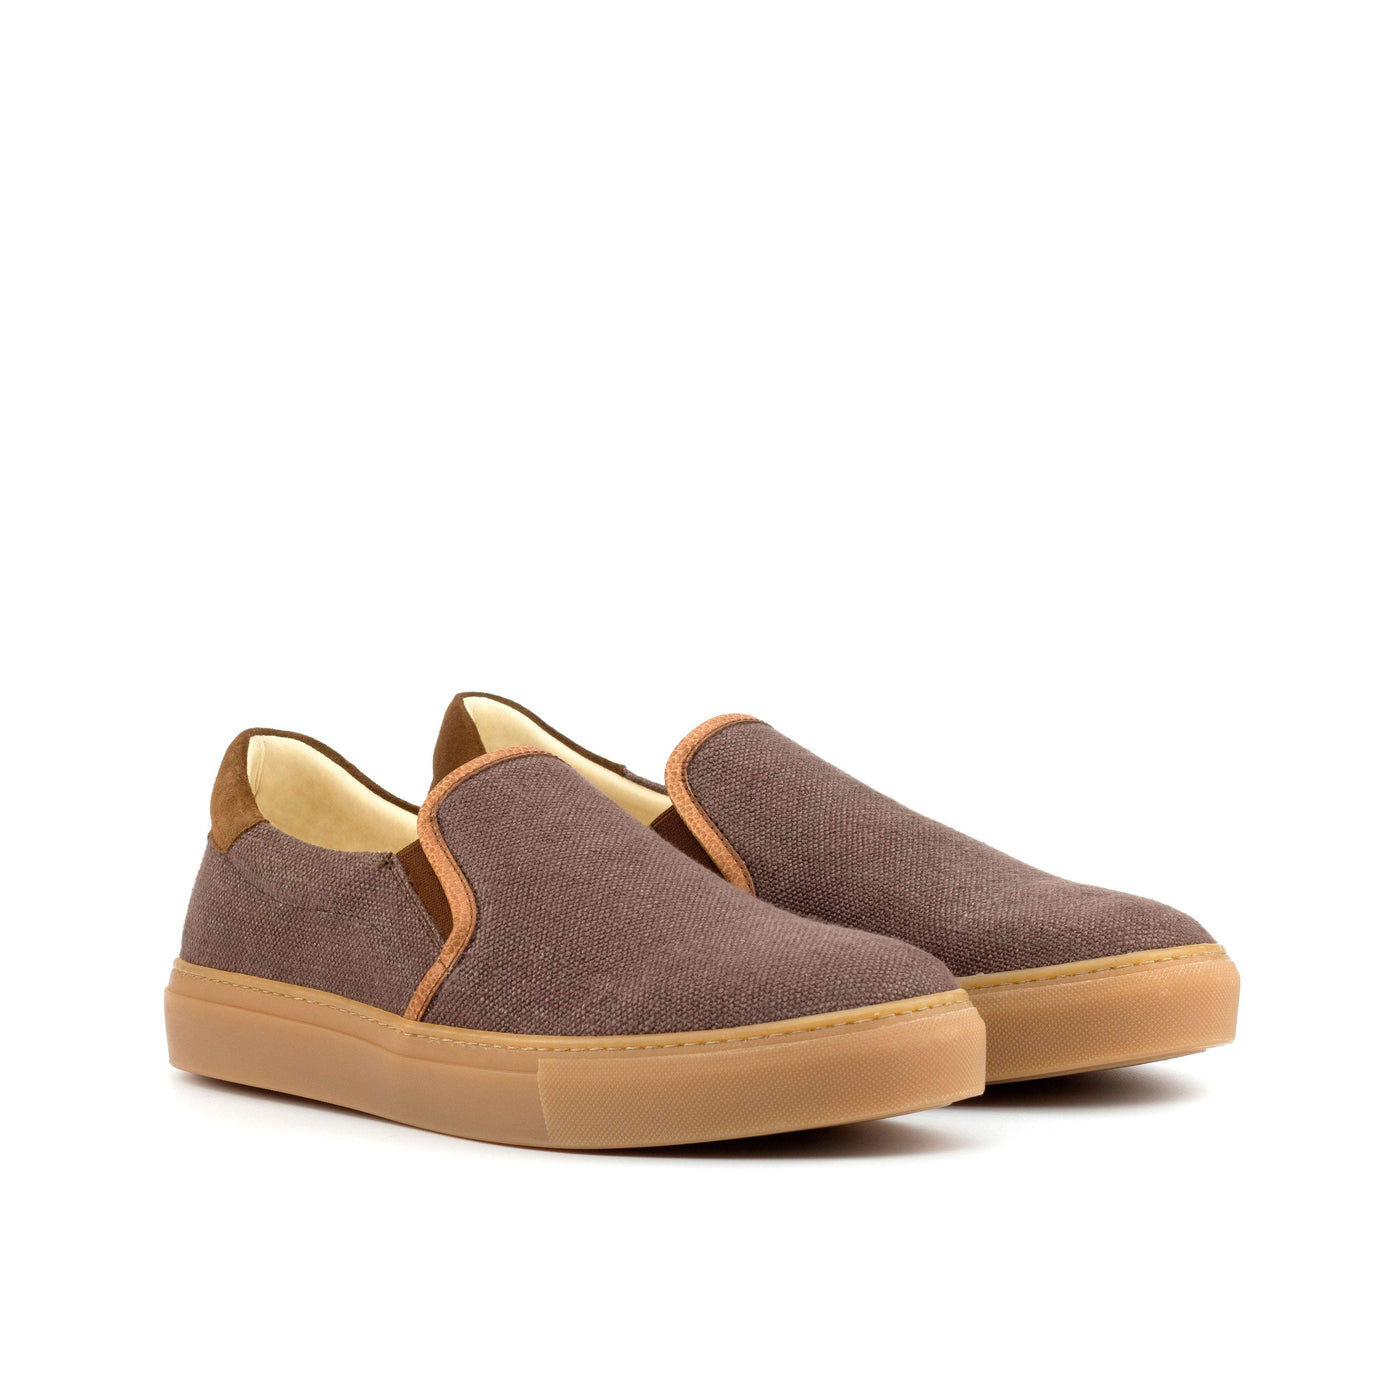 Men's Slip On Shoes Leather Brown 4895 3- MERRIMIUM